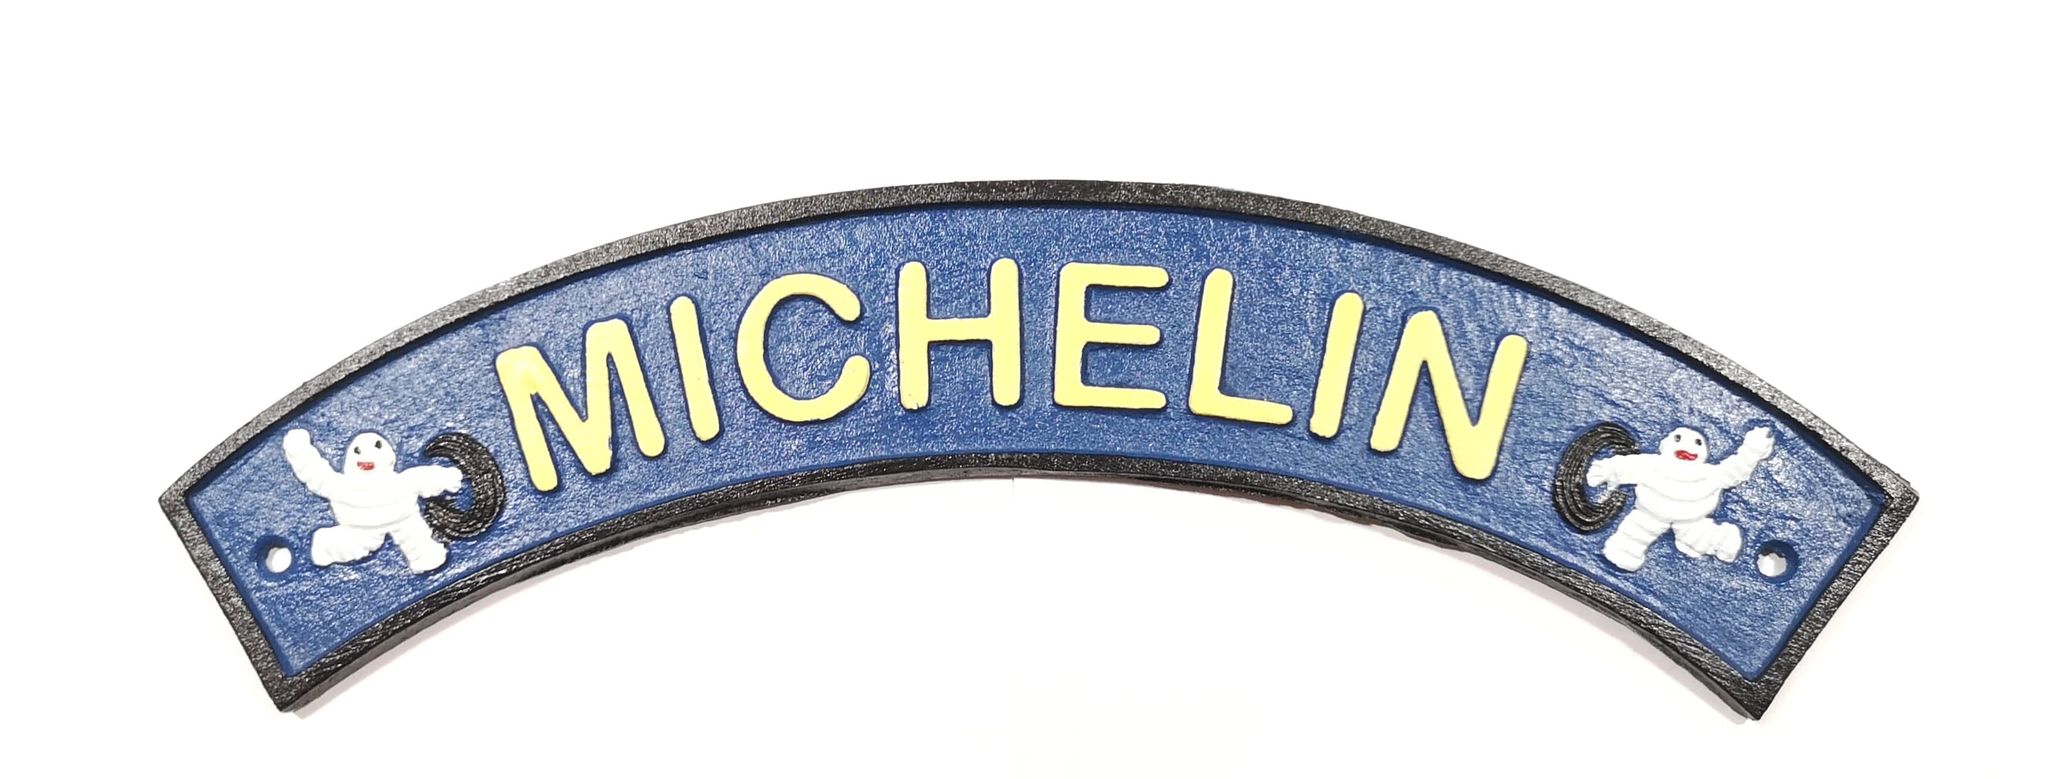 Michelin Man Bibendum Curved Cast Iron Vintage Tyre Advertising Sign 40cm x 7cm